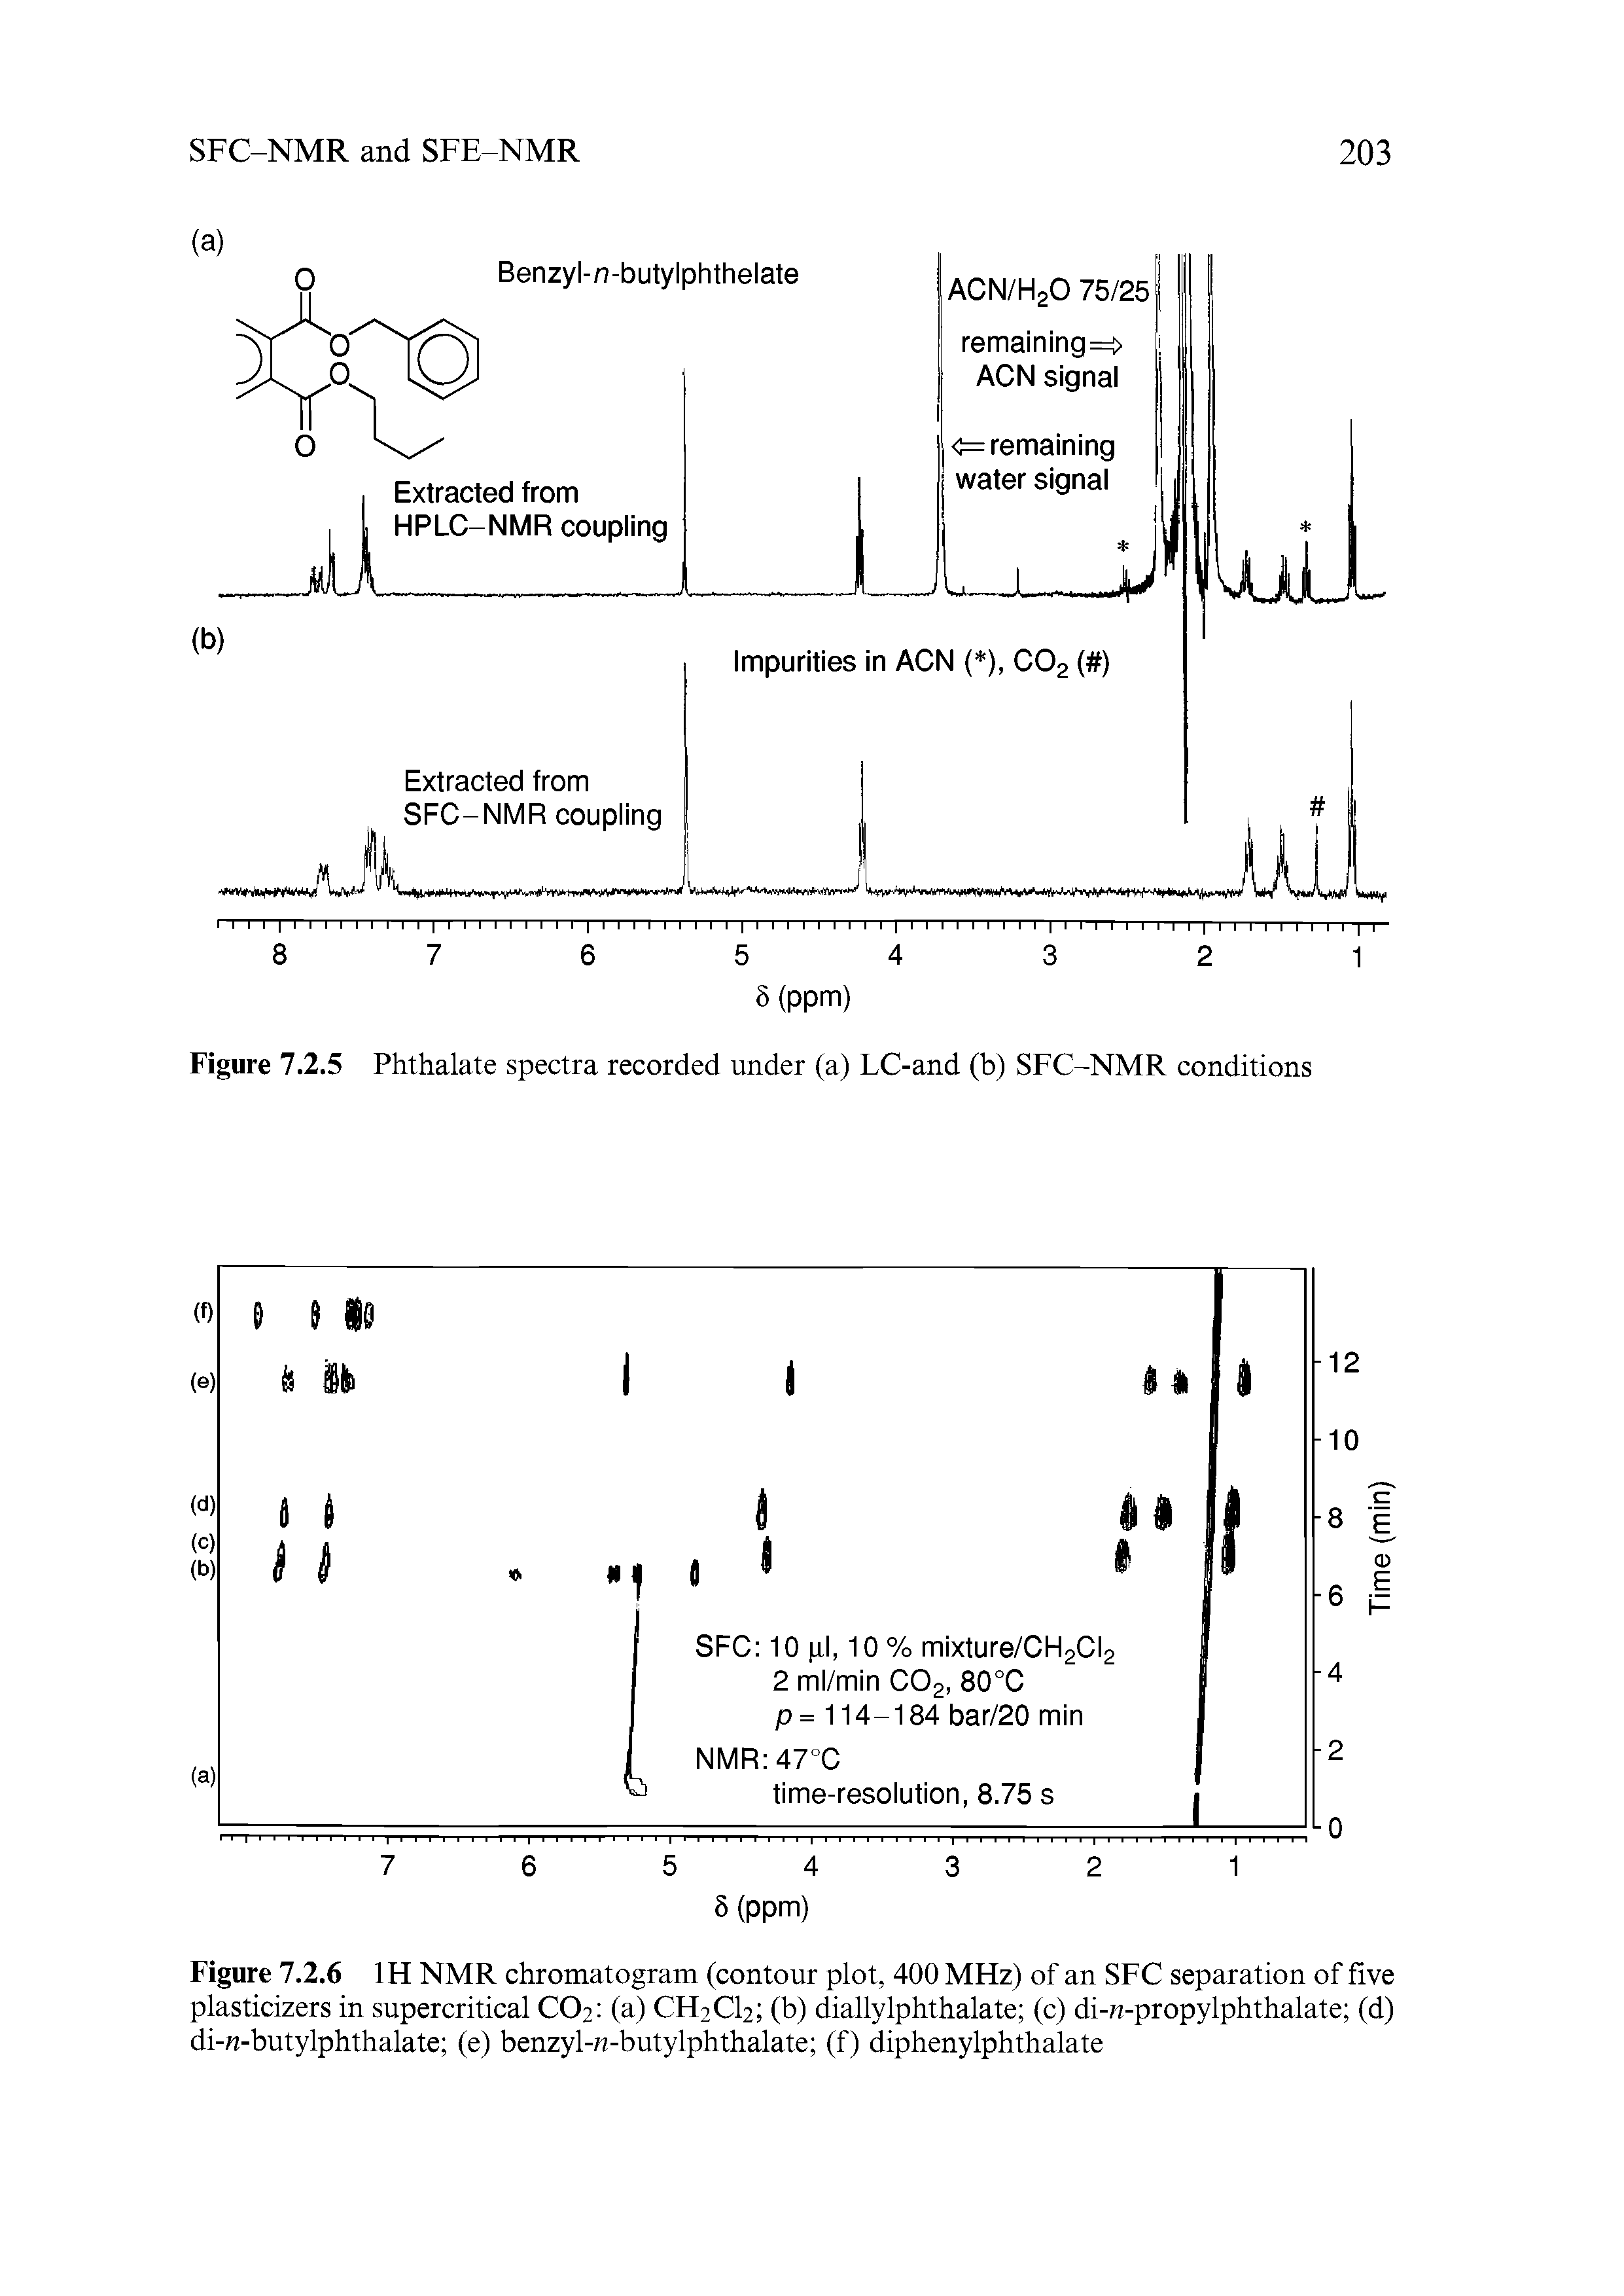 Figure 7.2.6 1H NMR chromatogram (contour plot, 400 MHz) of an SFC separation of five plasticizers in supercritical CO2 (a) CH2CI2 (b) diallylphthalate (c) di-/ -propyl phthalate (d) di-rc-butylphthalate (e) benzyl-/ -butyl phthalate (f) diphenylphthalate...